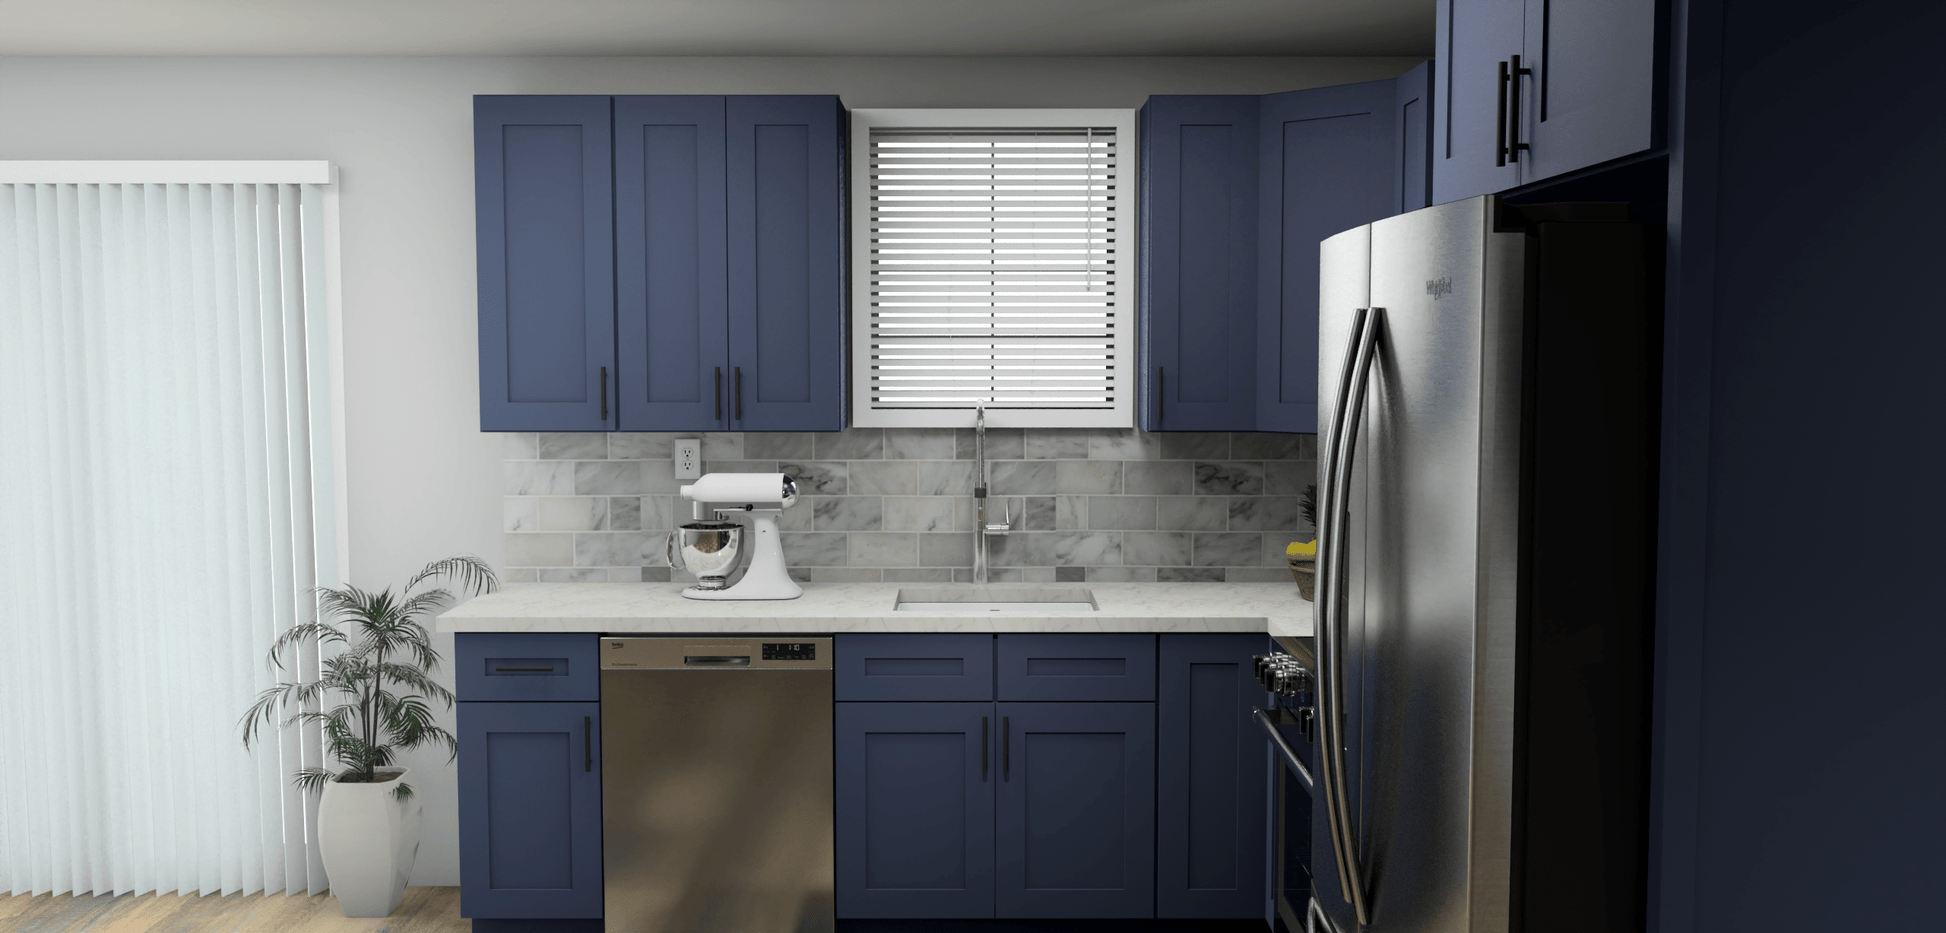 LessCare Danbury Blue 9 x 10 L Shaped Kitchen Side Layout Photo